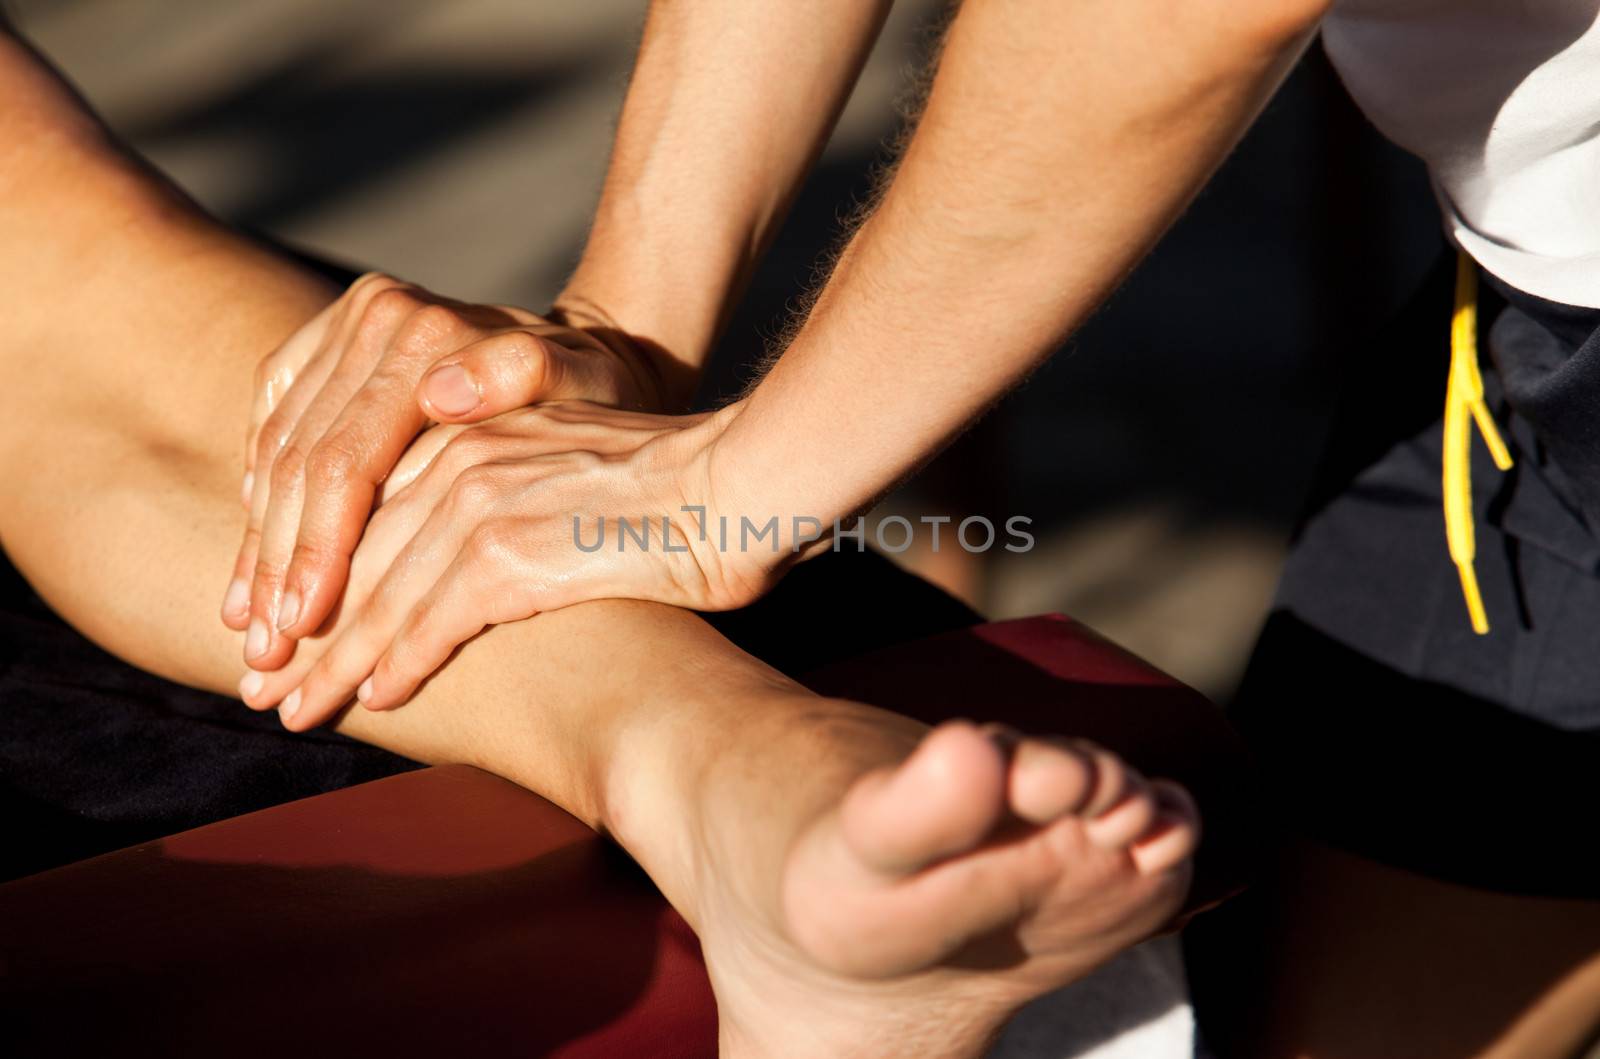 Sports massage by wellphoto